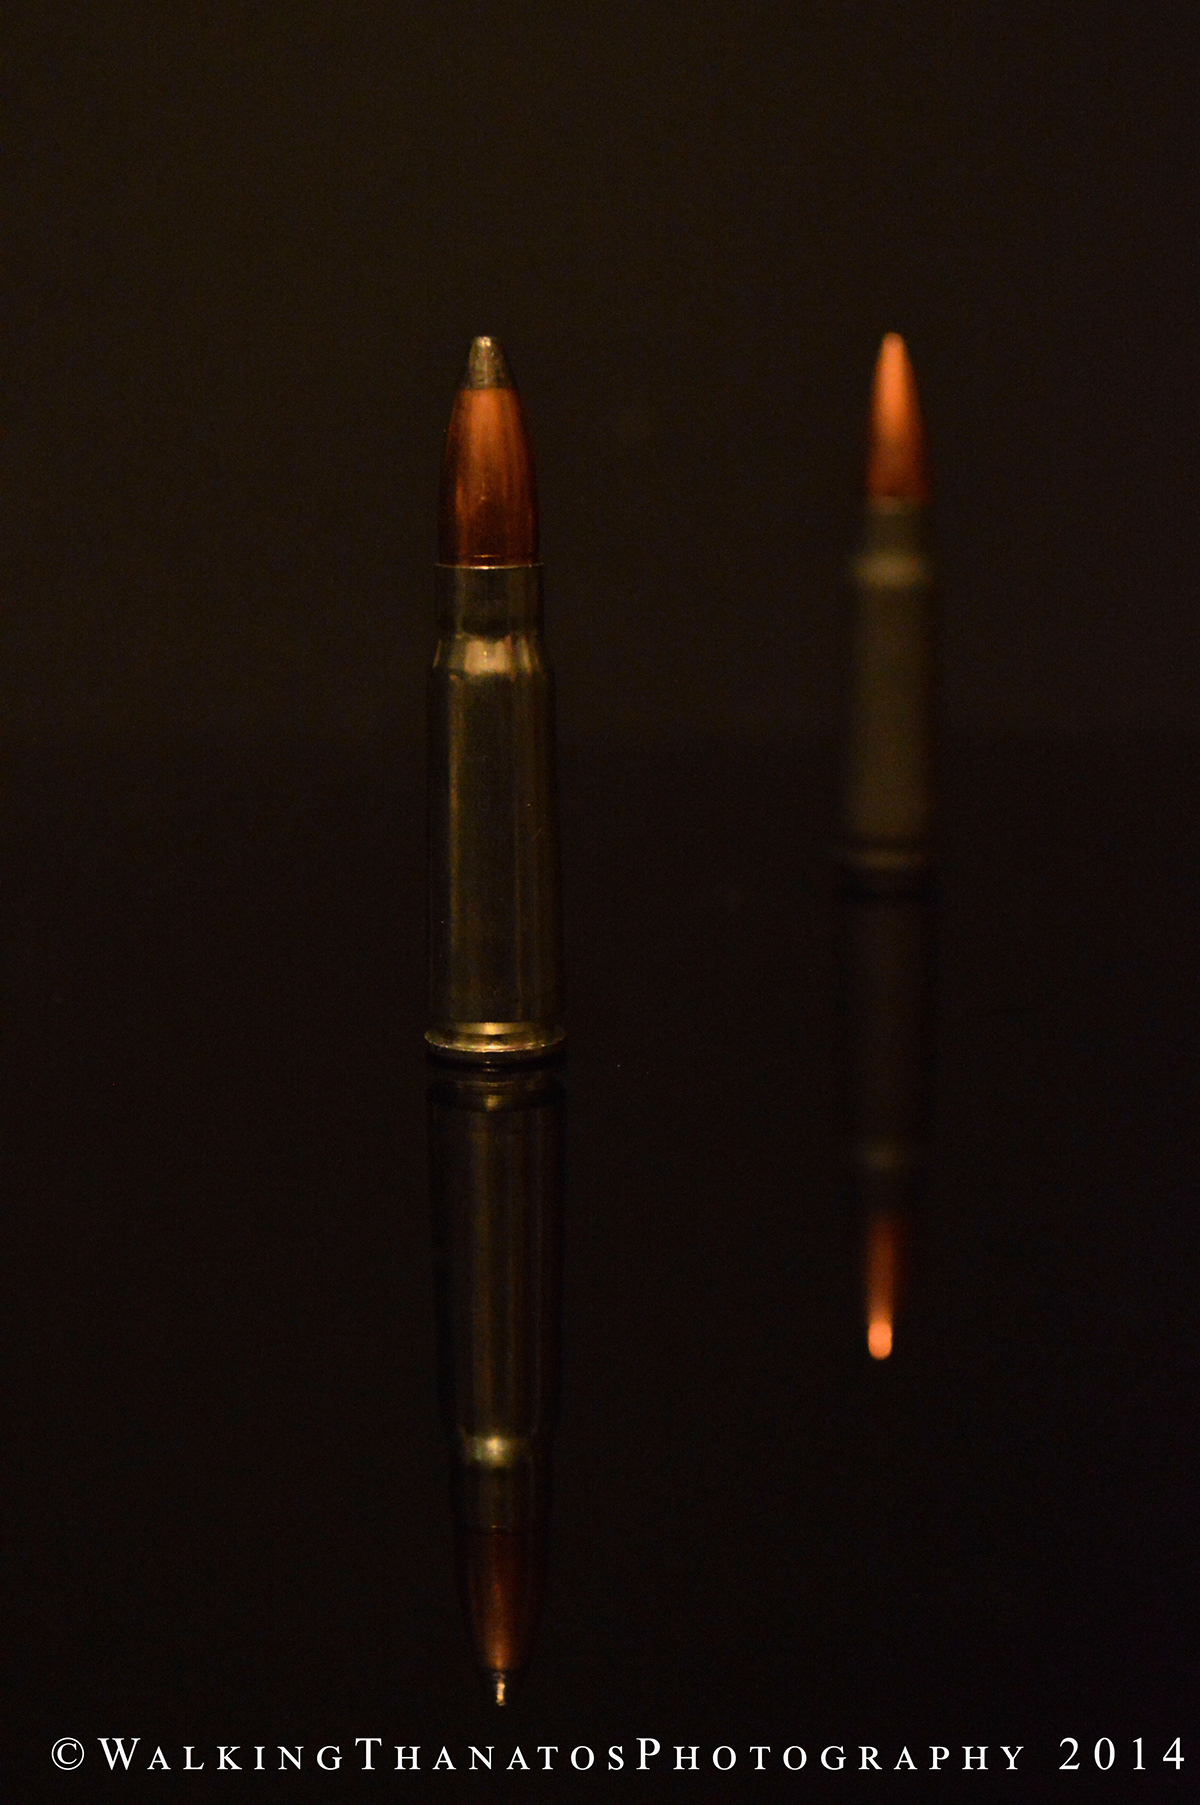 Bullets Ammo Firearms cartridge case/shell projectile lead hollow point gun powder